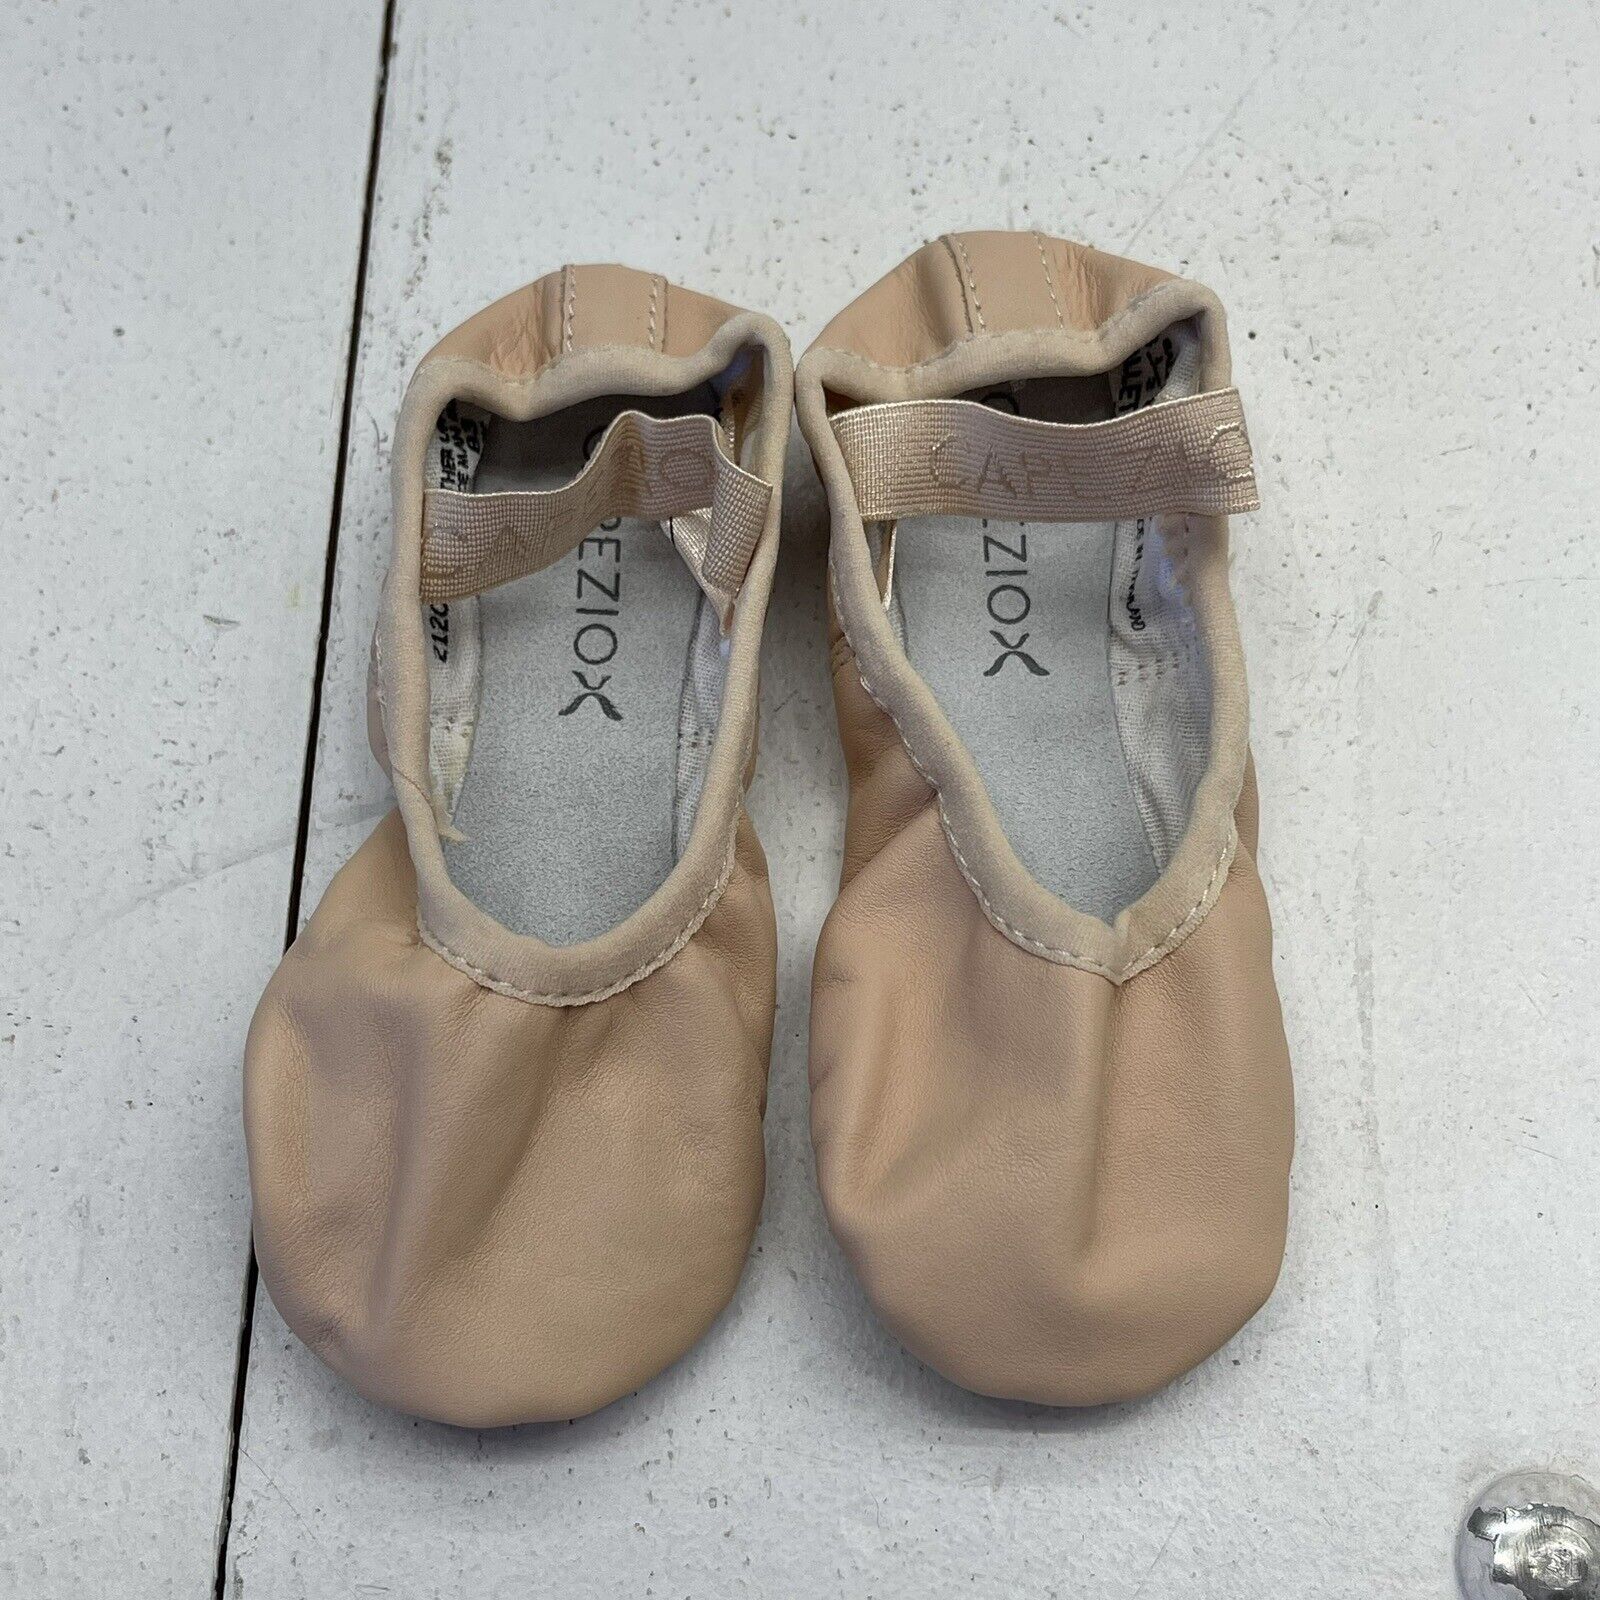 Capezio Ballet Pink Ultra Soft Transition Tights Girls Size 8-12 NEW -  beyond exchange